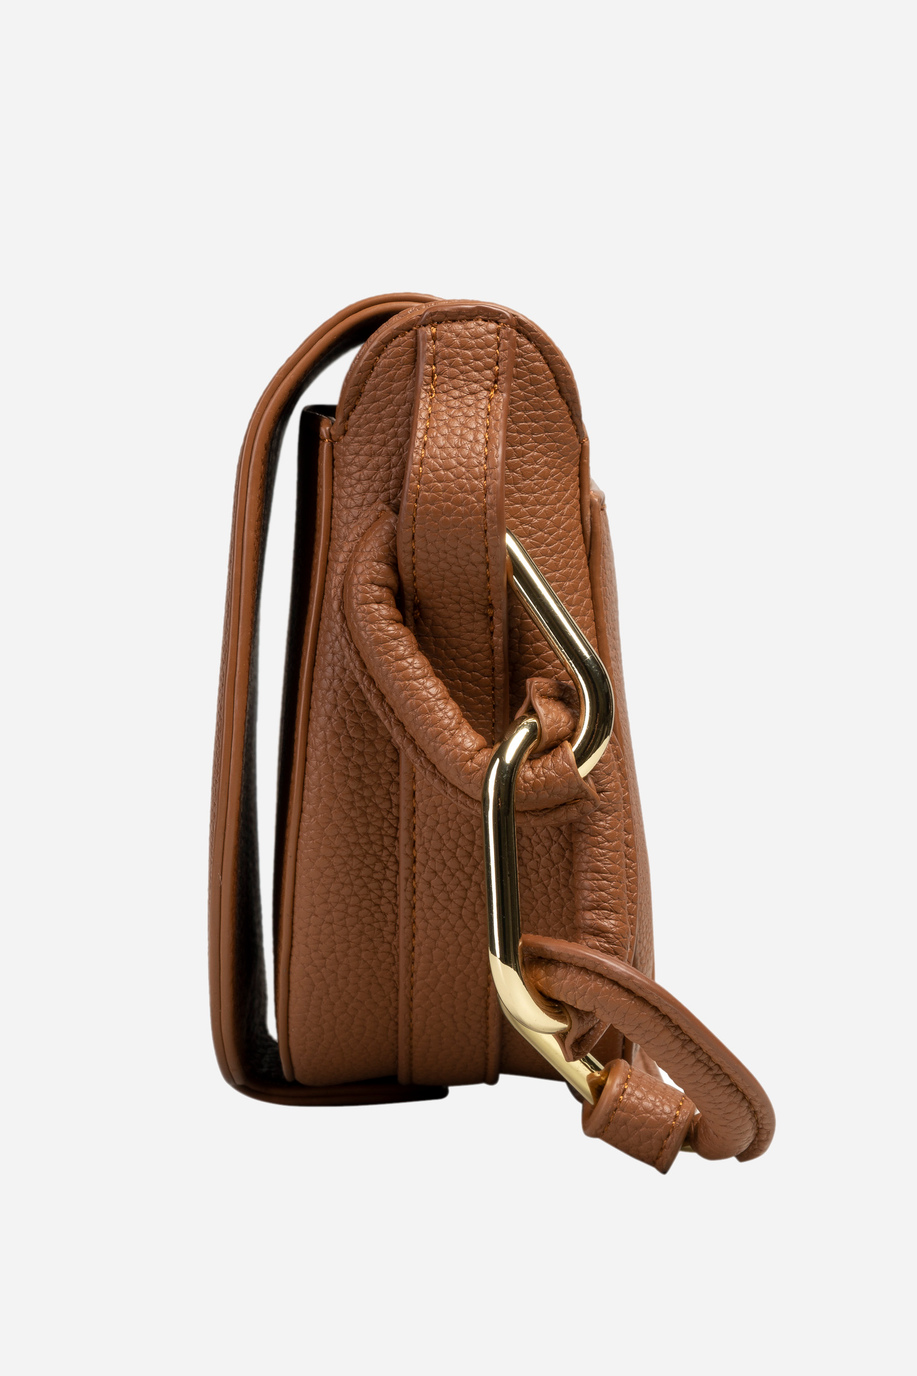 Umhängetasche aus Leder – Paloma - Taschen | La Martina - Official Online Shop